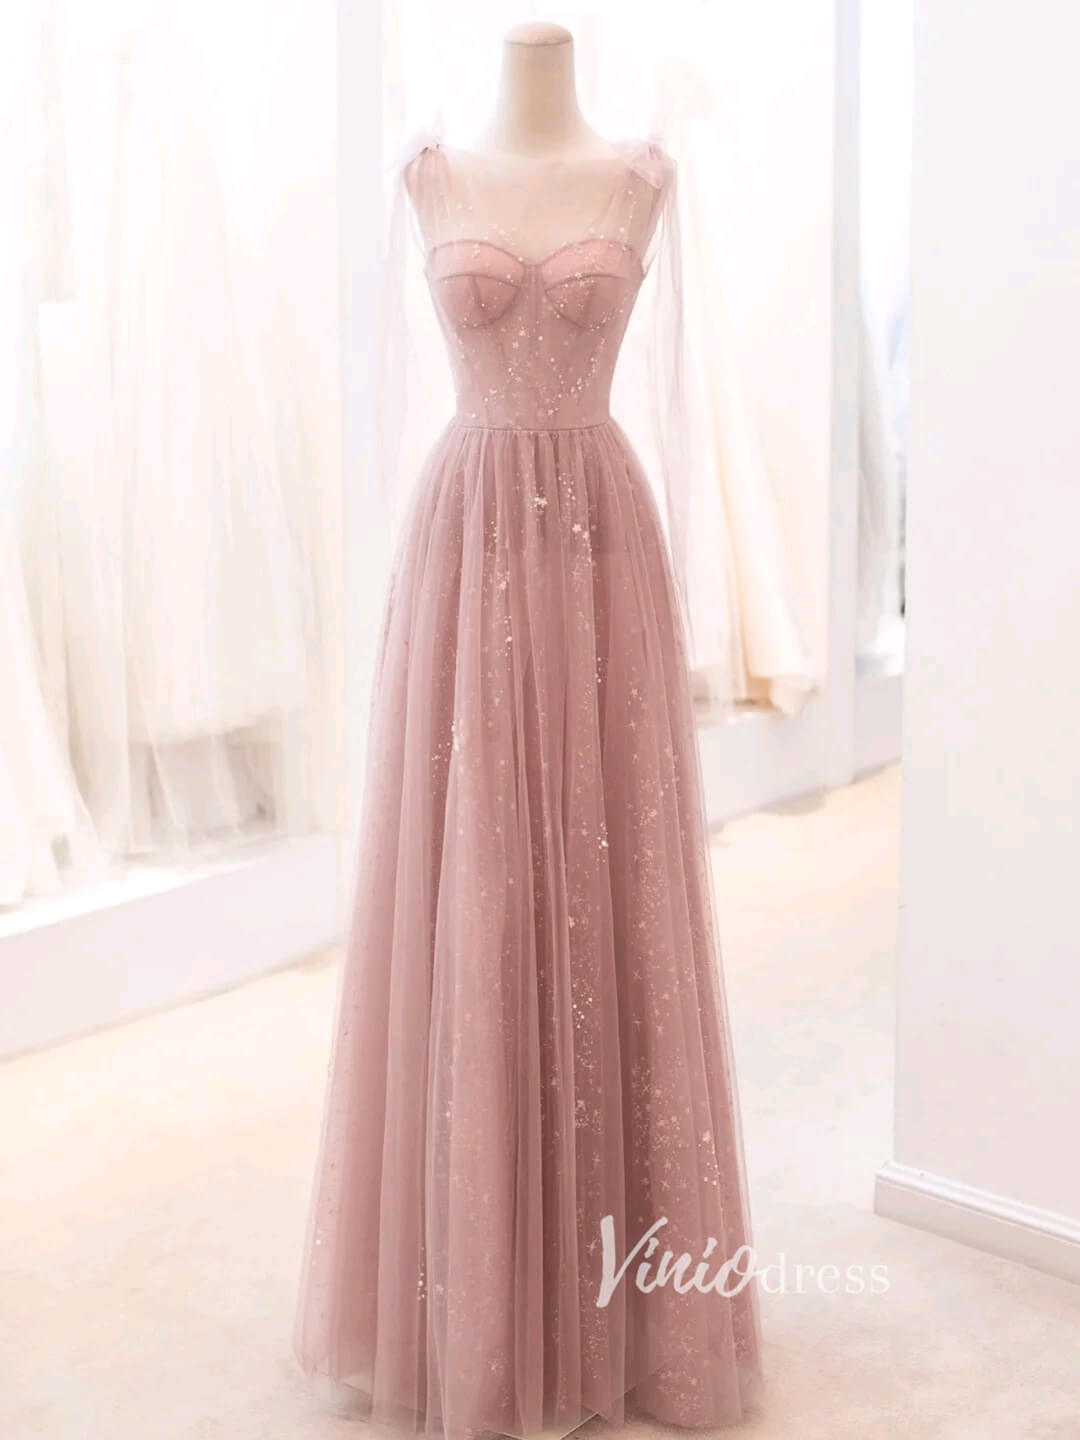 Dusty Rose Pink Starry Tulle Prom Dresses A-line Evening Dress FD3426-prom dresses-Viniodress-Dusty Rose-Custom Size-Viniodress